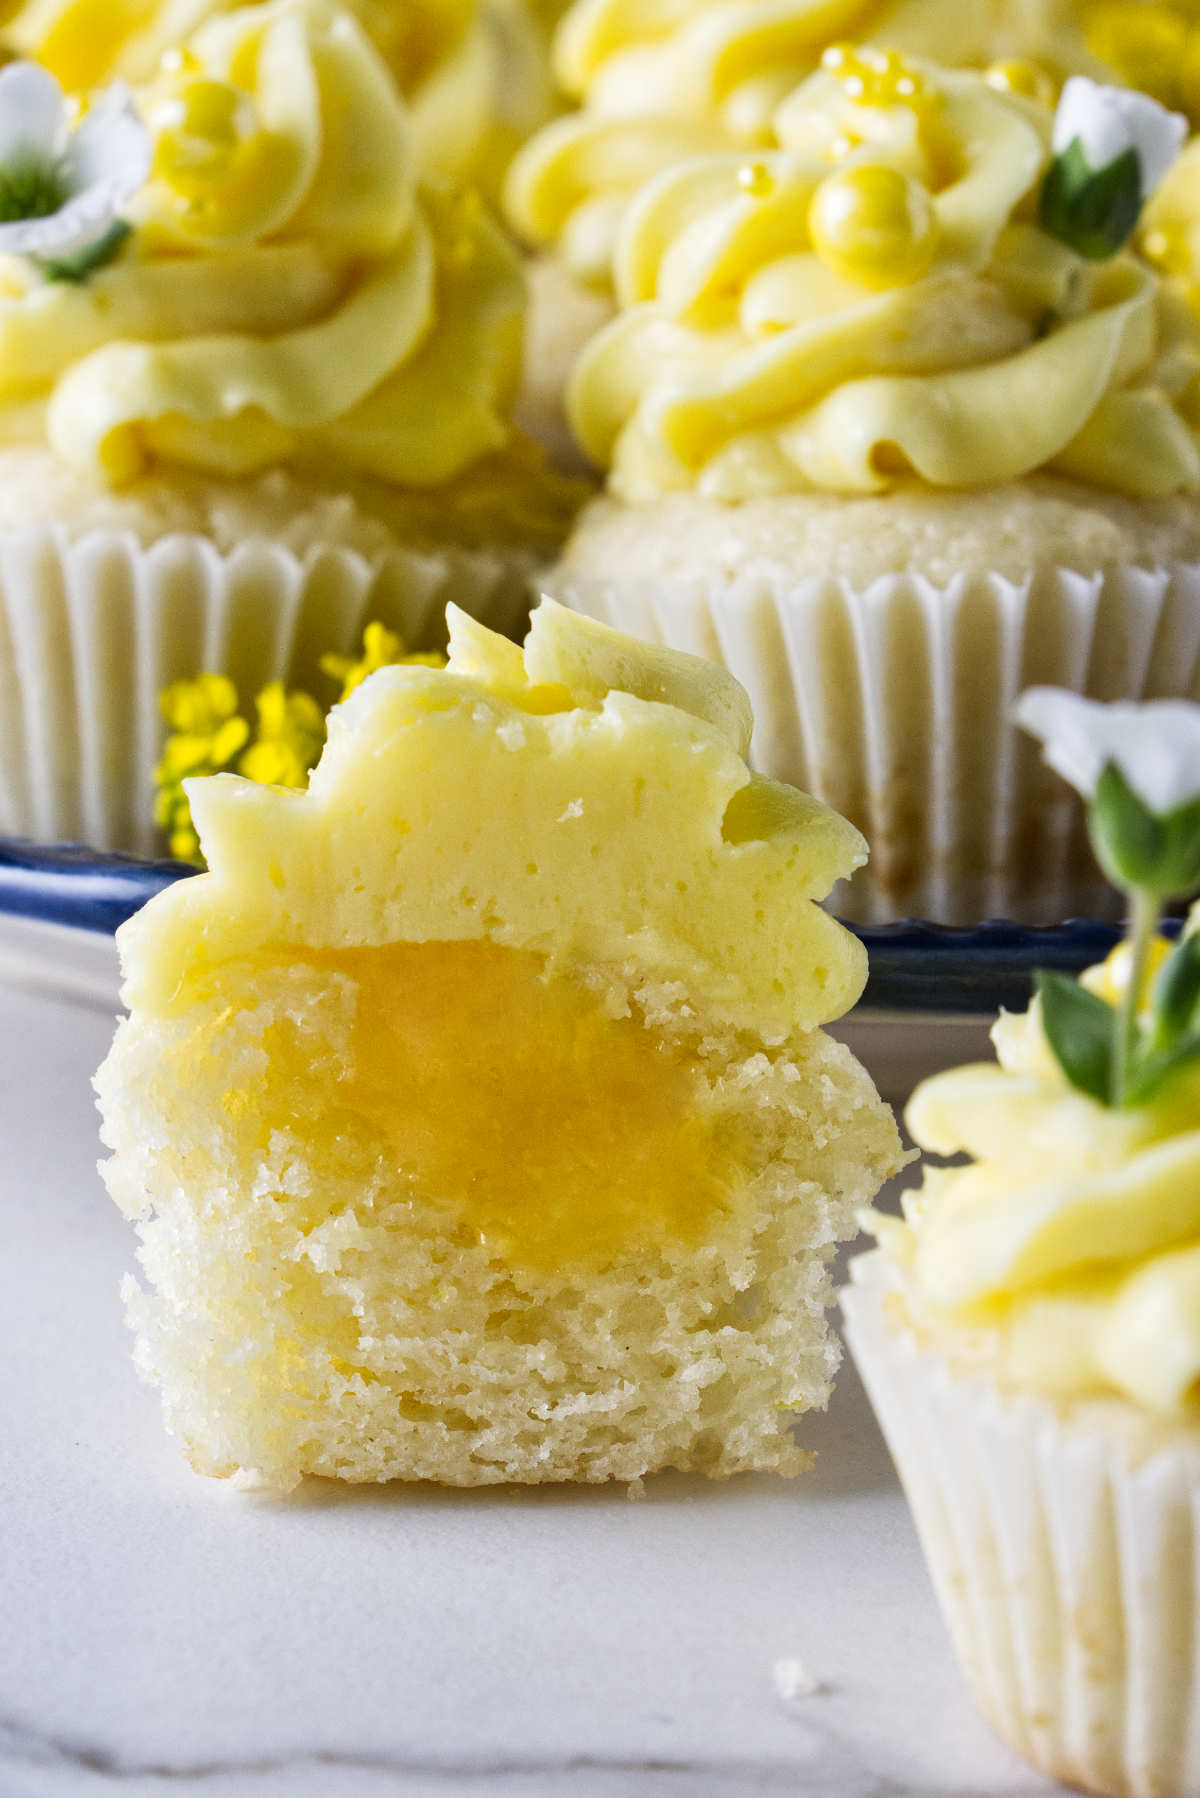 A lemon cupcake sliced in half and showing lemon curd filling.